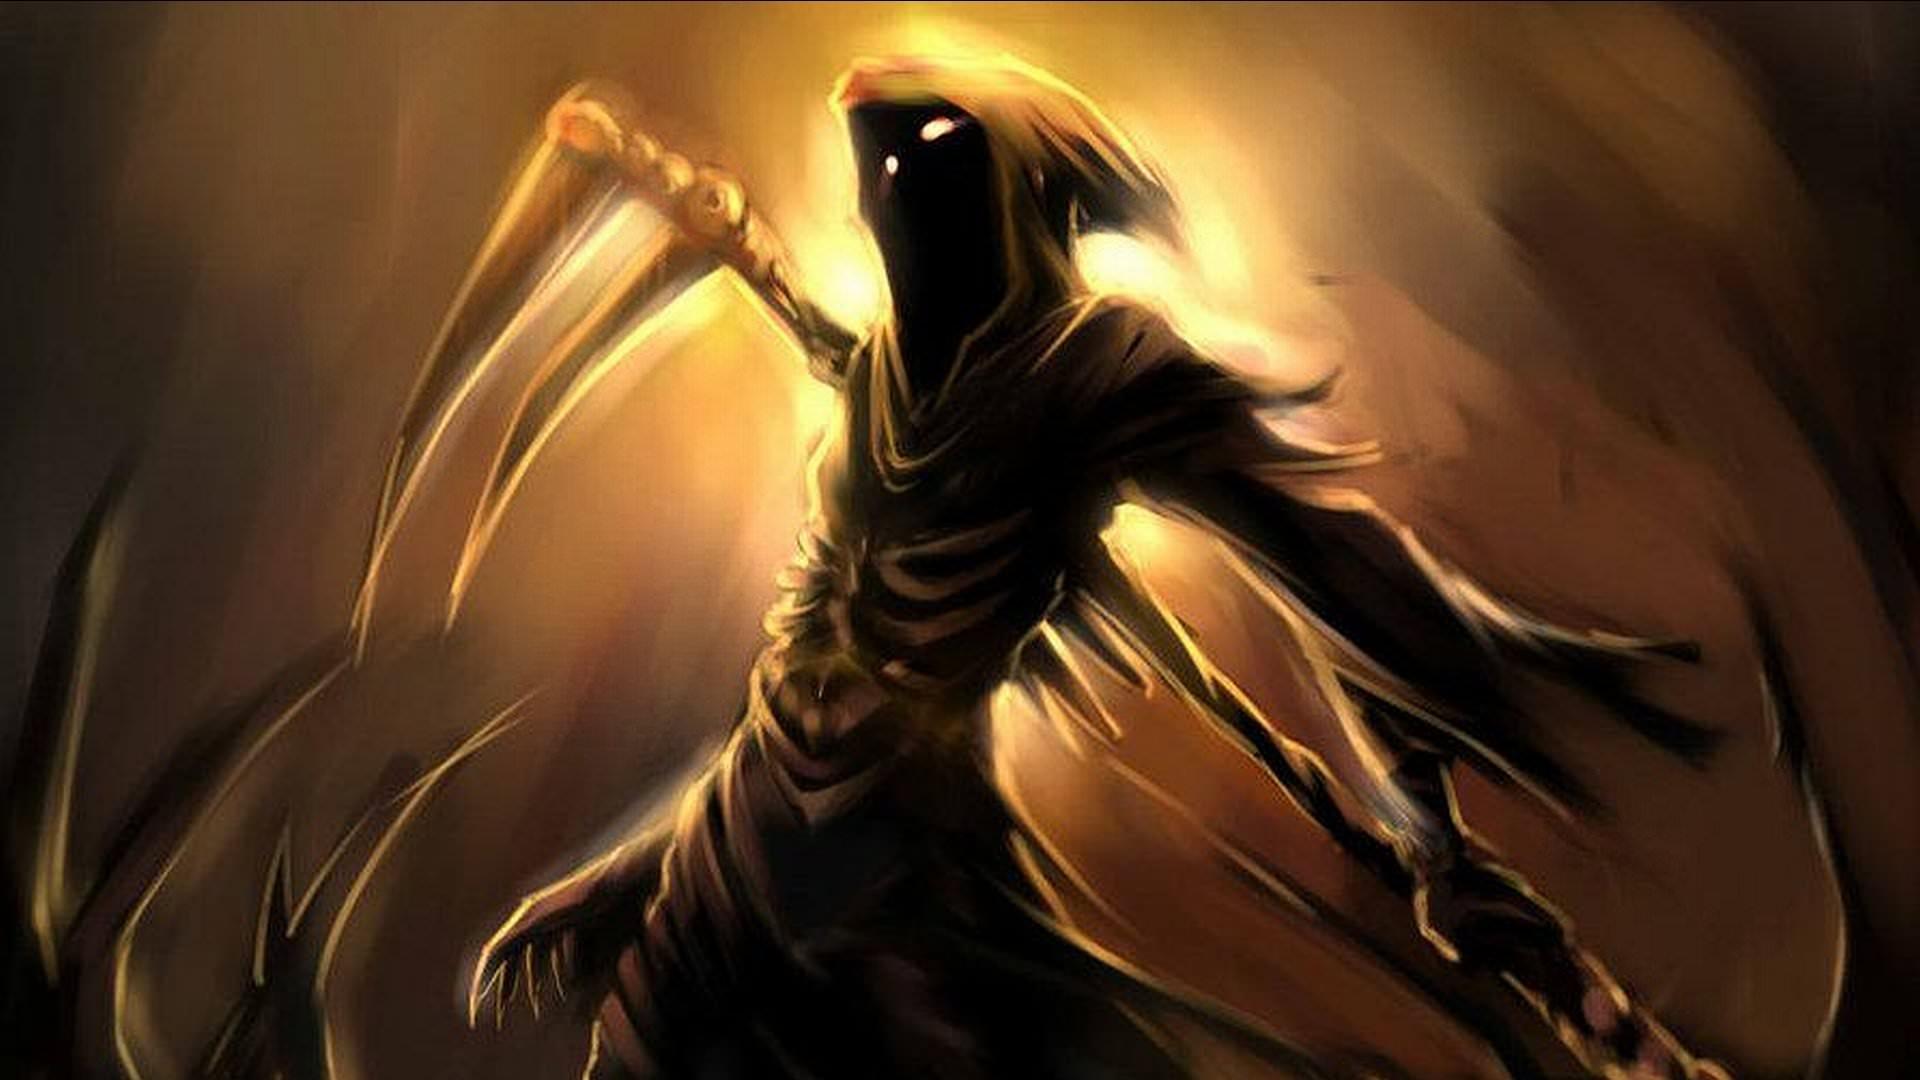 Grim Reaper wallpaper 1920x1080 Full HD (1080p) desktop background